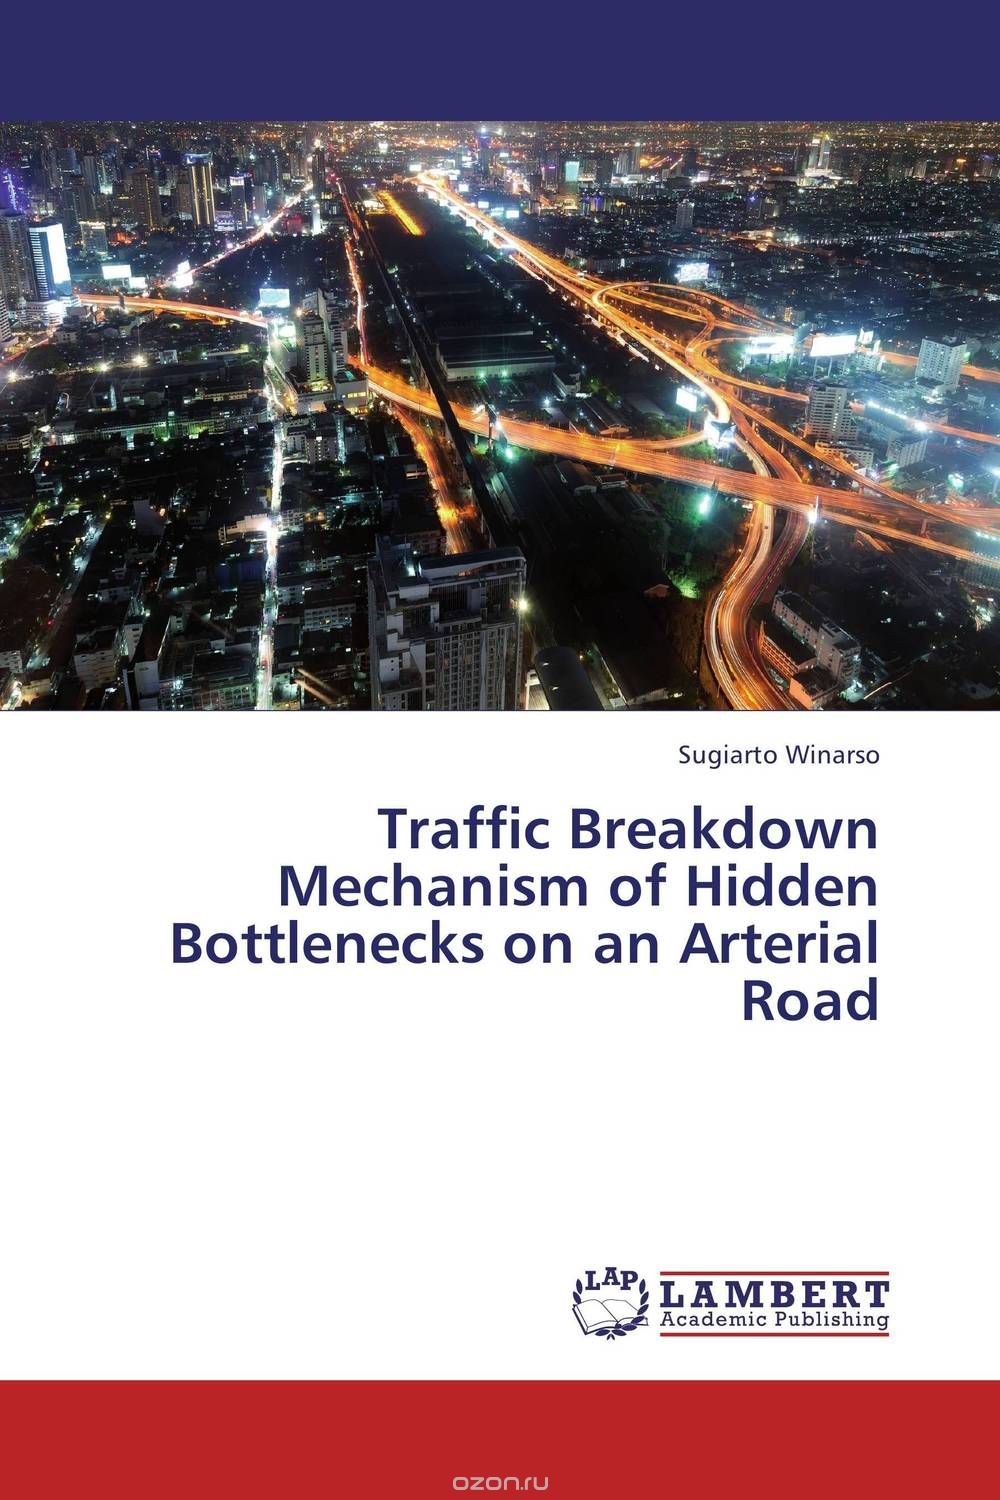 Скачать книгу "Traffic Breakdown Mechanism of Hidden Bottlenecks on an Arterial Road"